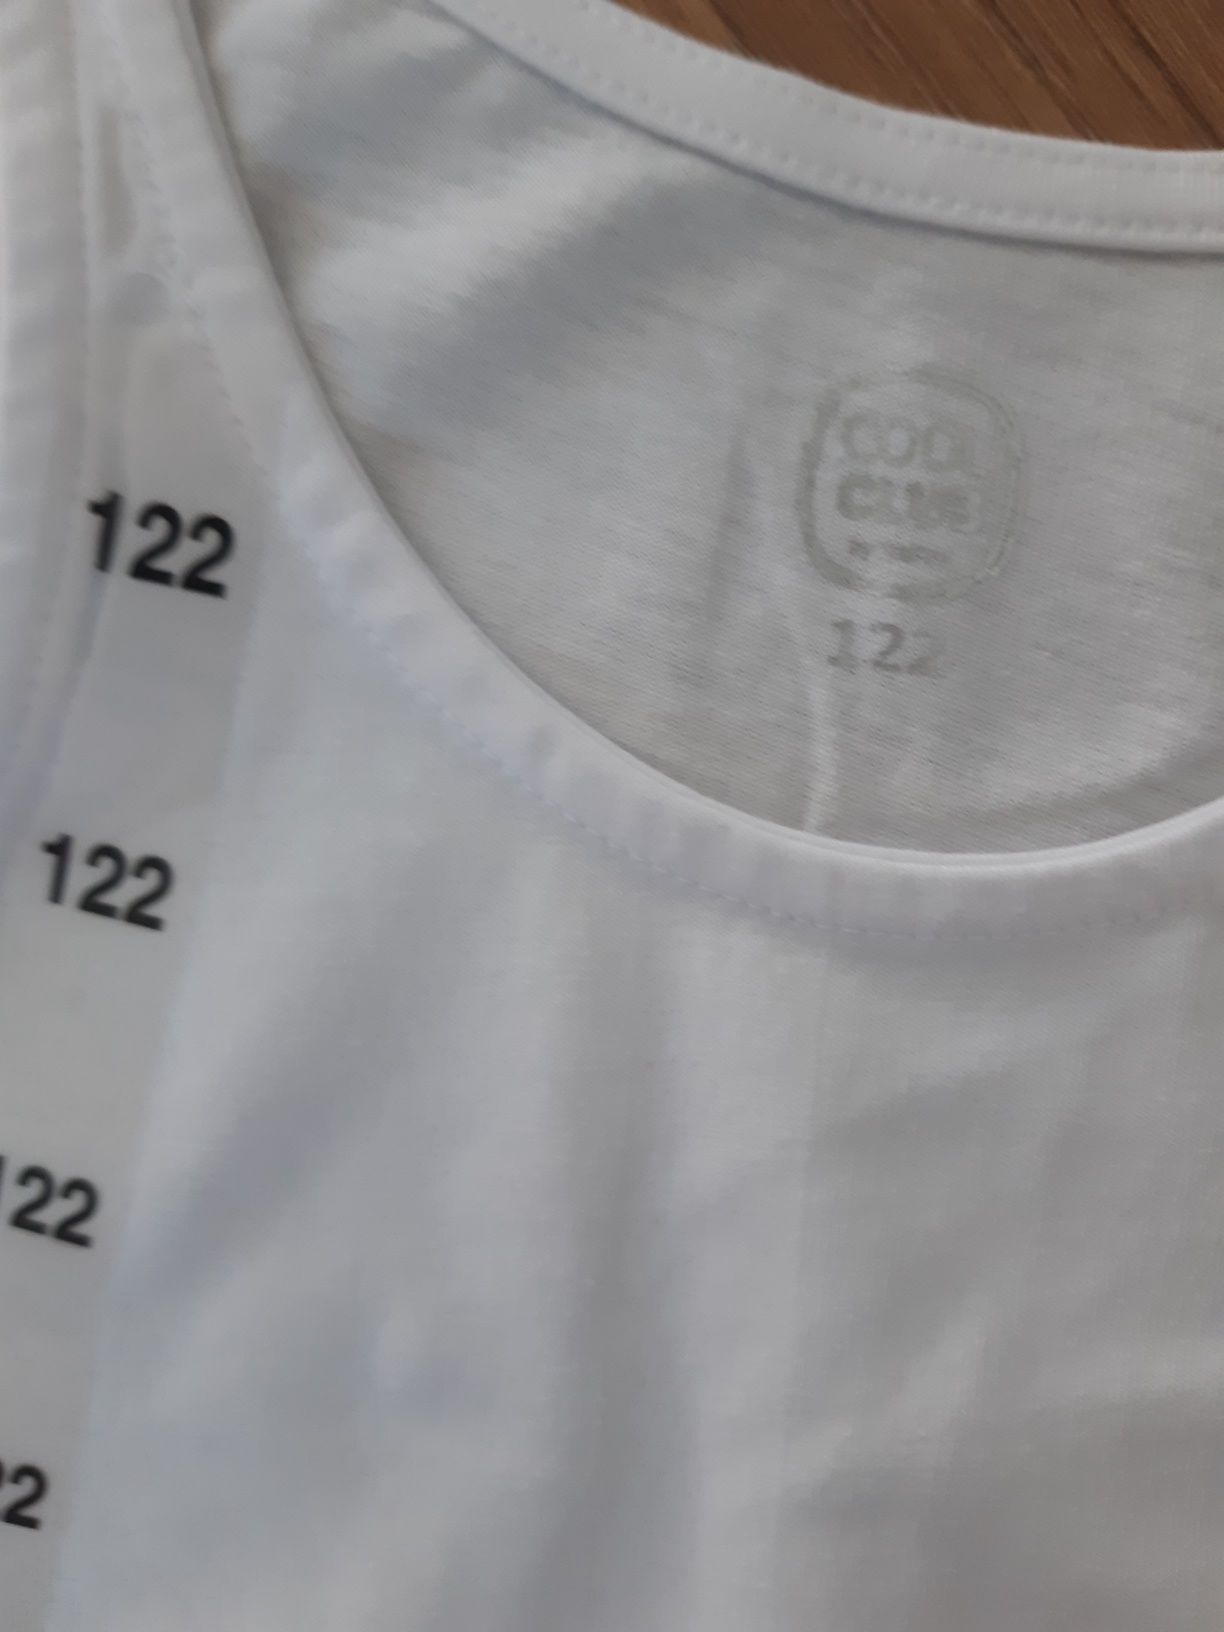 Koszulka na naramkach biała r. 122 NOWA Cool Club Smyk + gratis